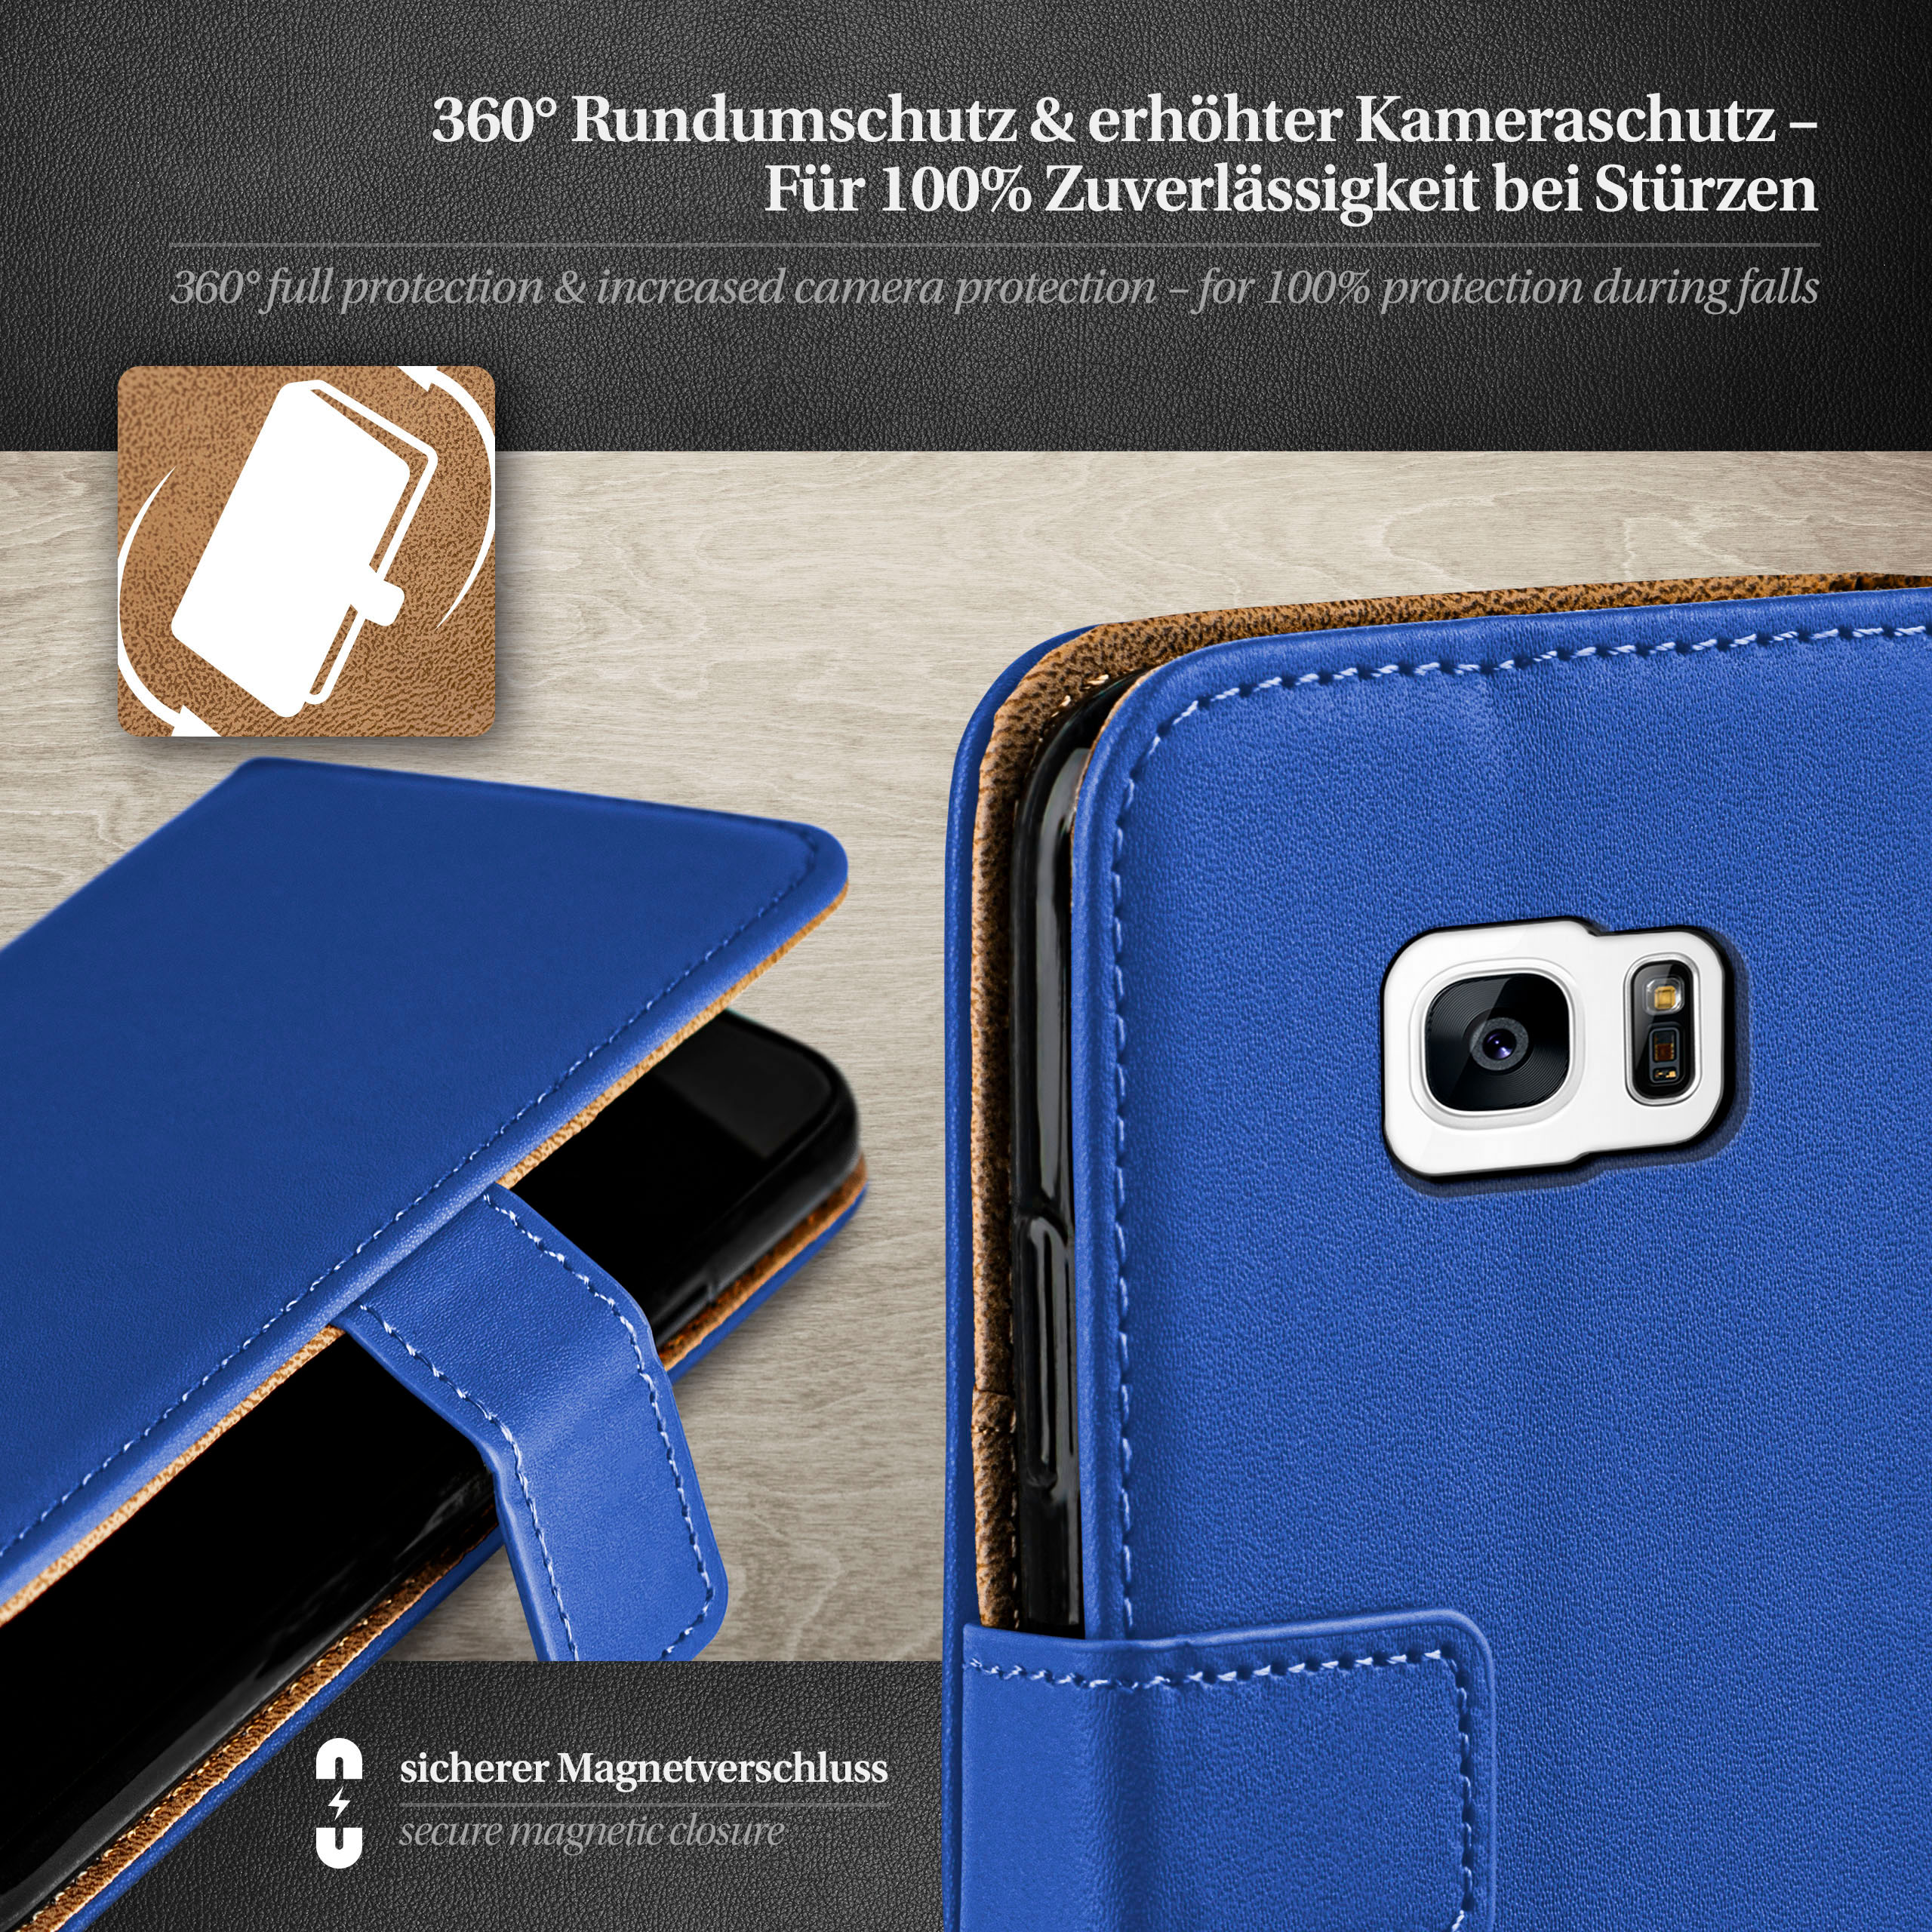 MOEX Book Galaxy Edge, Samsung, S7 Bookcover, Case, Royal-Blue